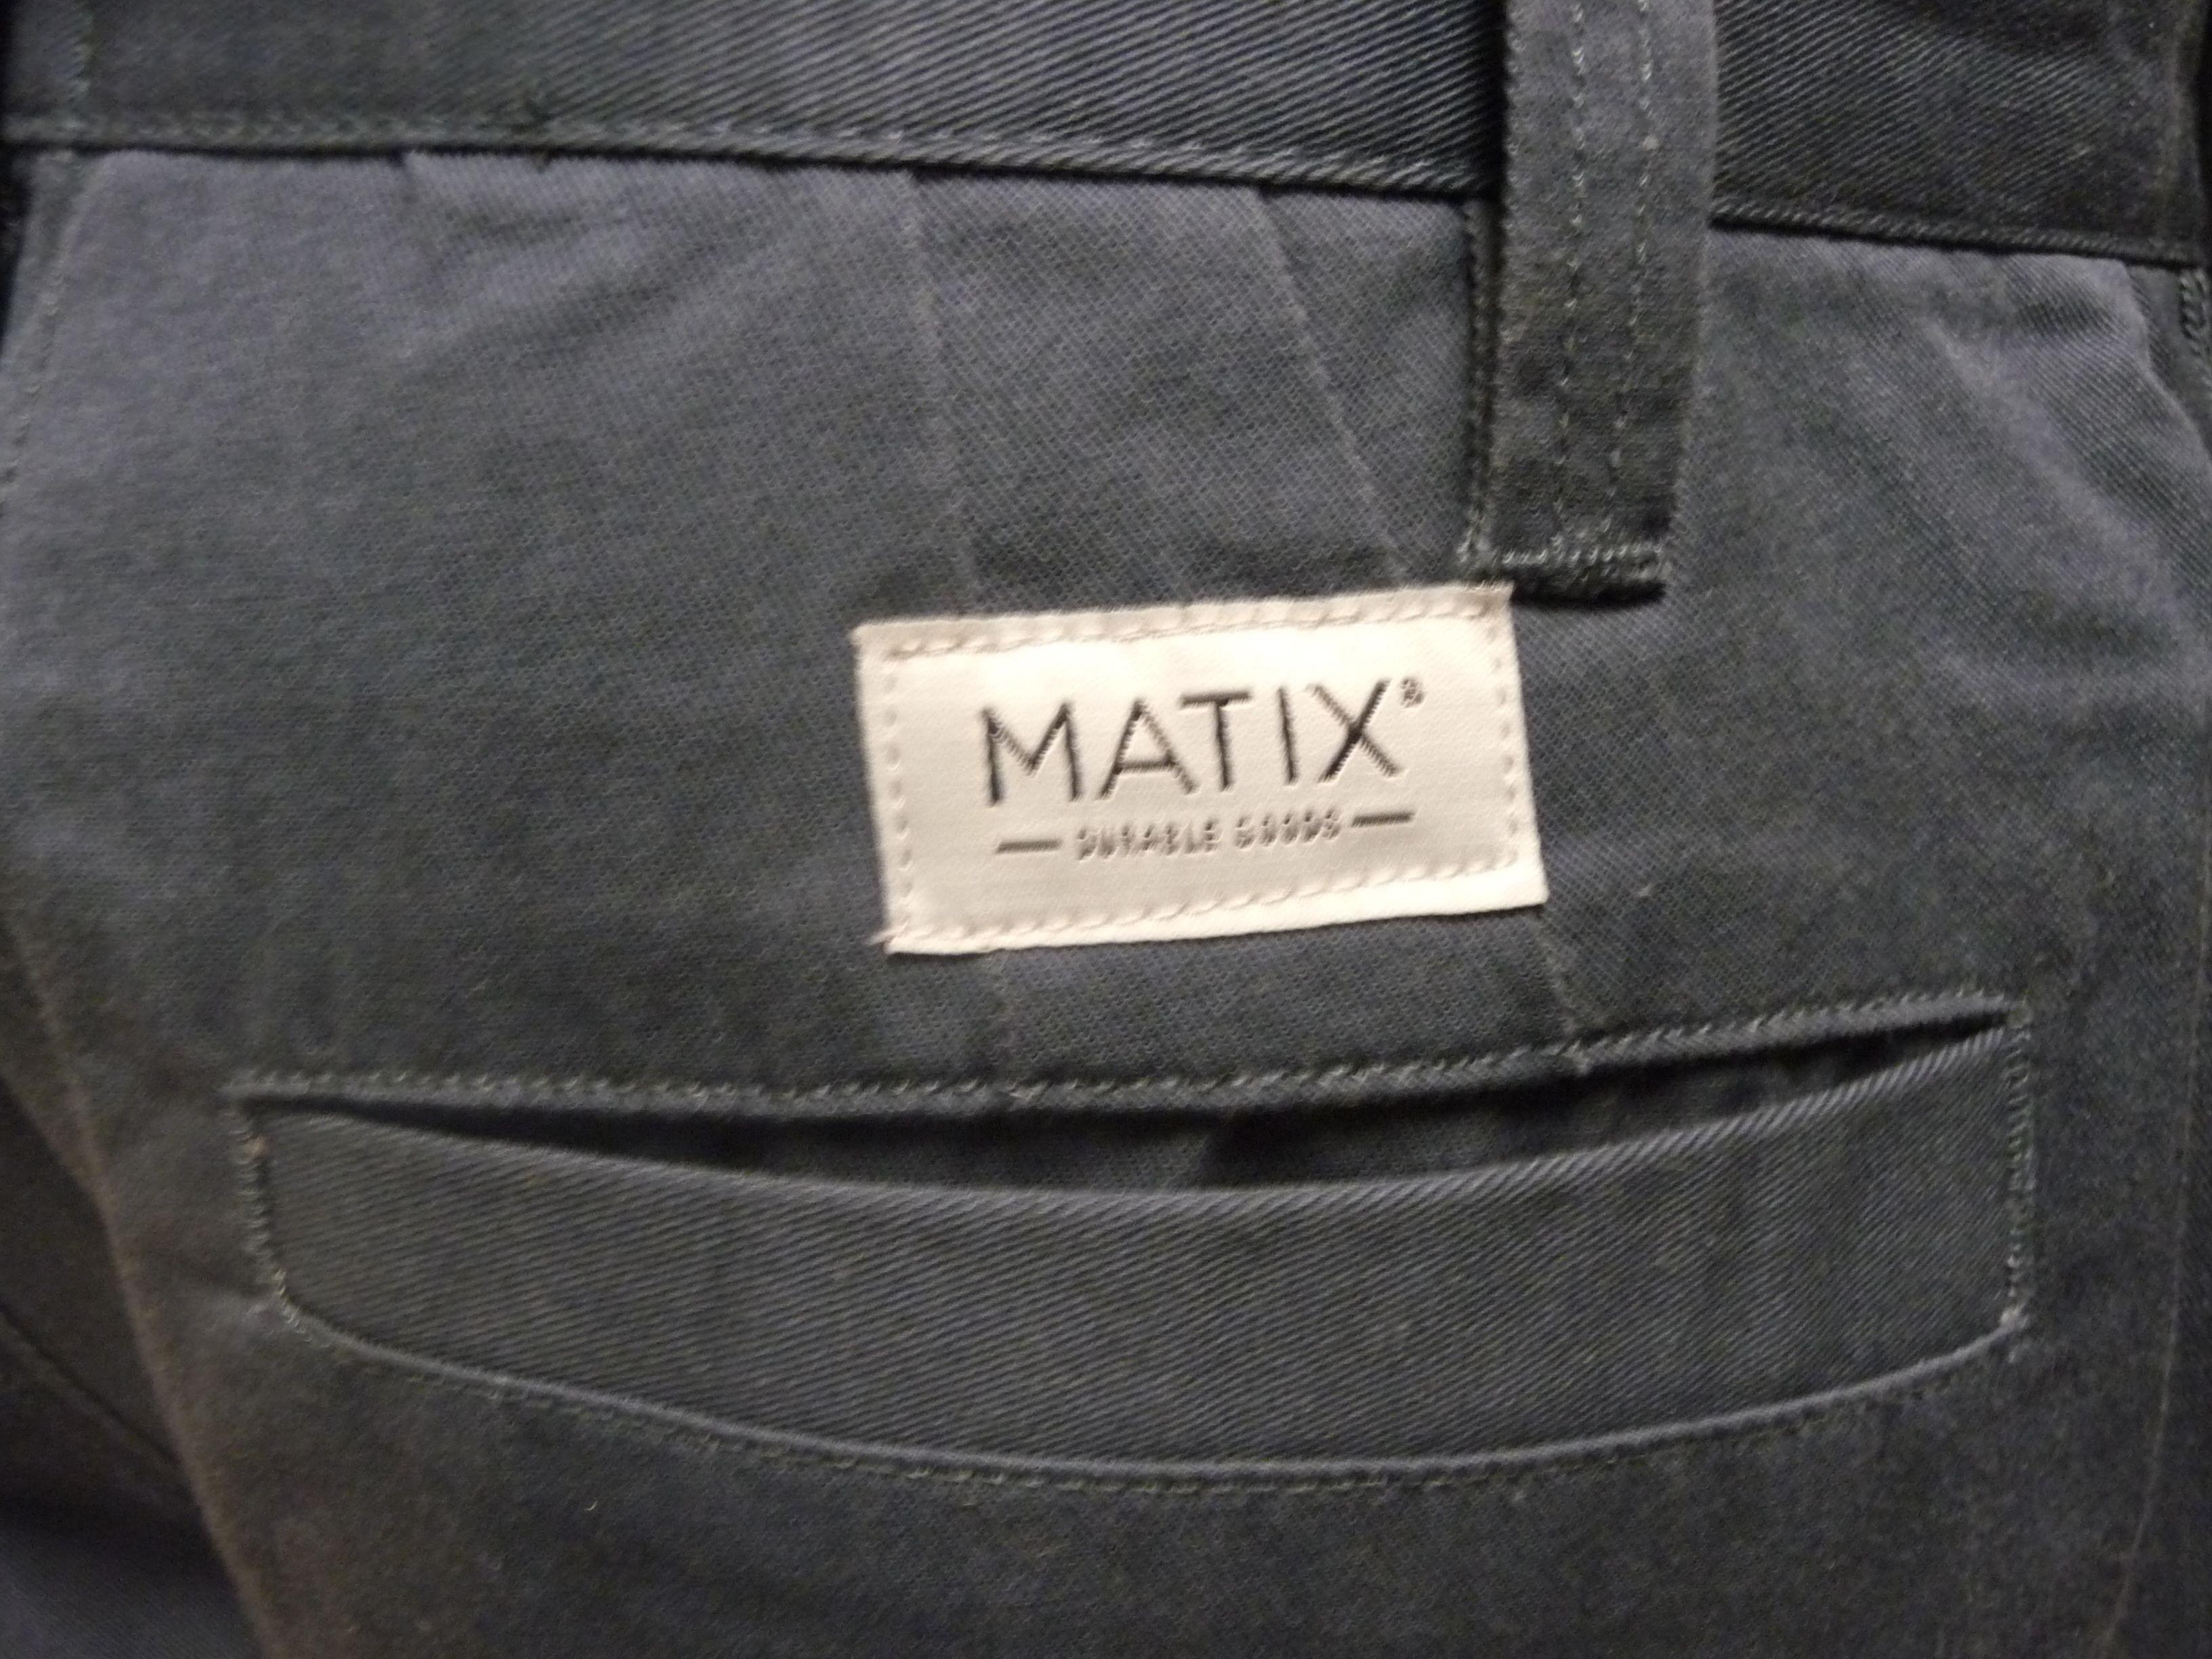 Matix Clothing Logo - Matix Clothing. Let It Roll Skateboarding